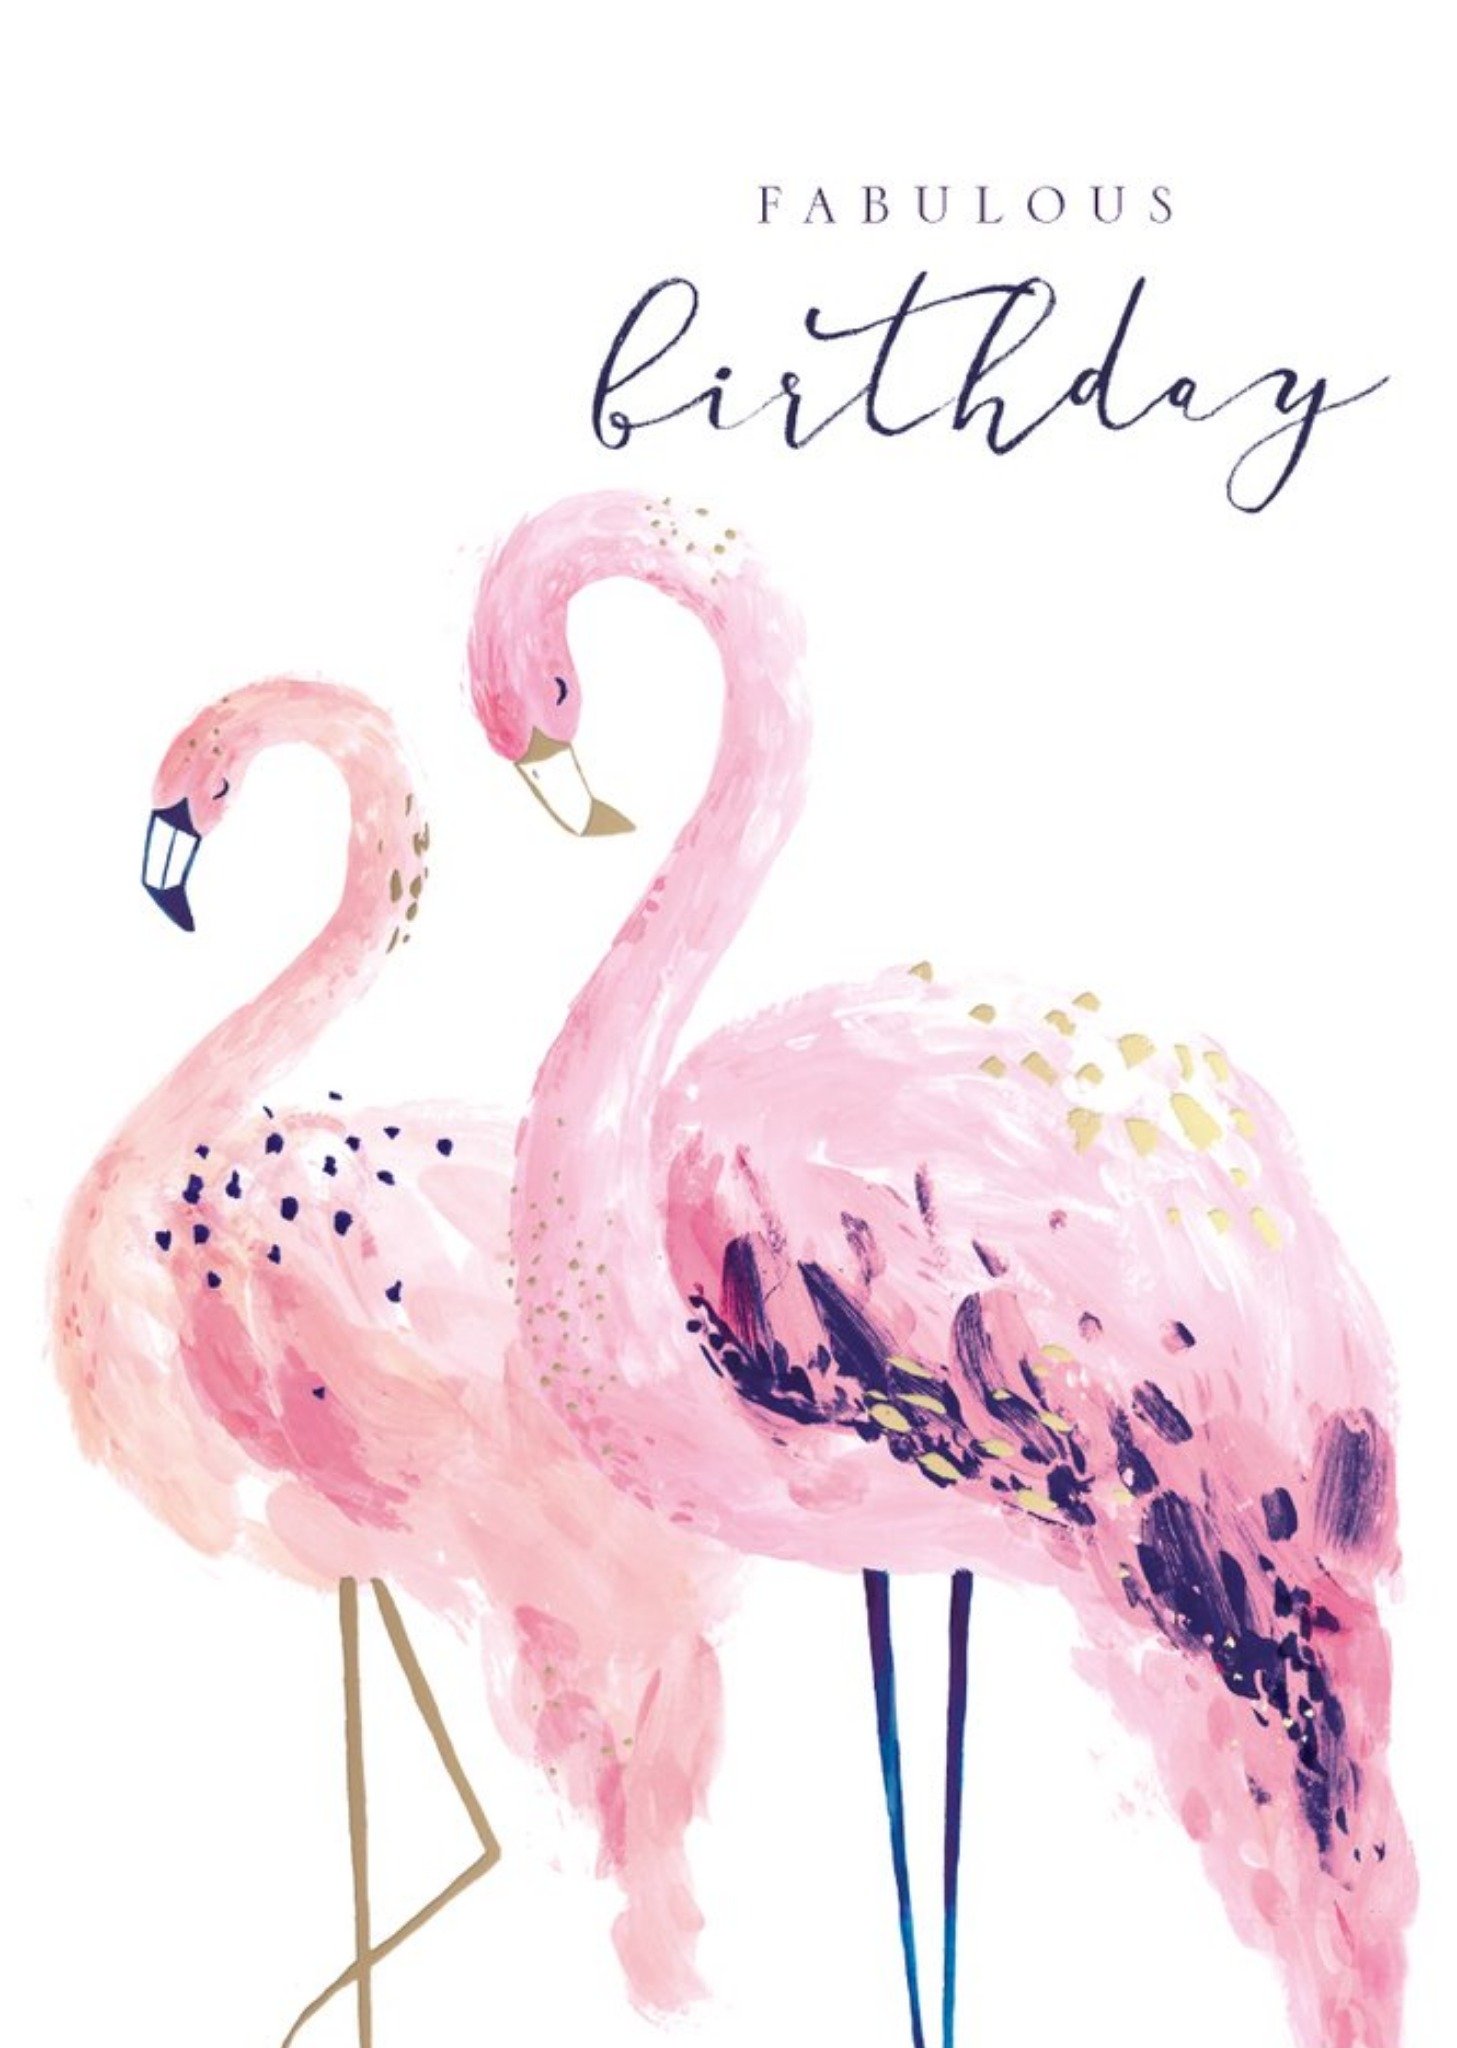 Moonpig Flamingos Painted Fabulous Birthday Card, Large